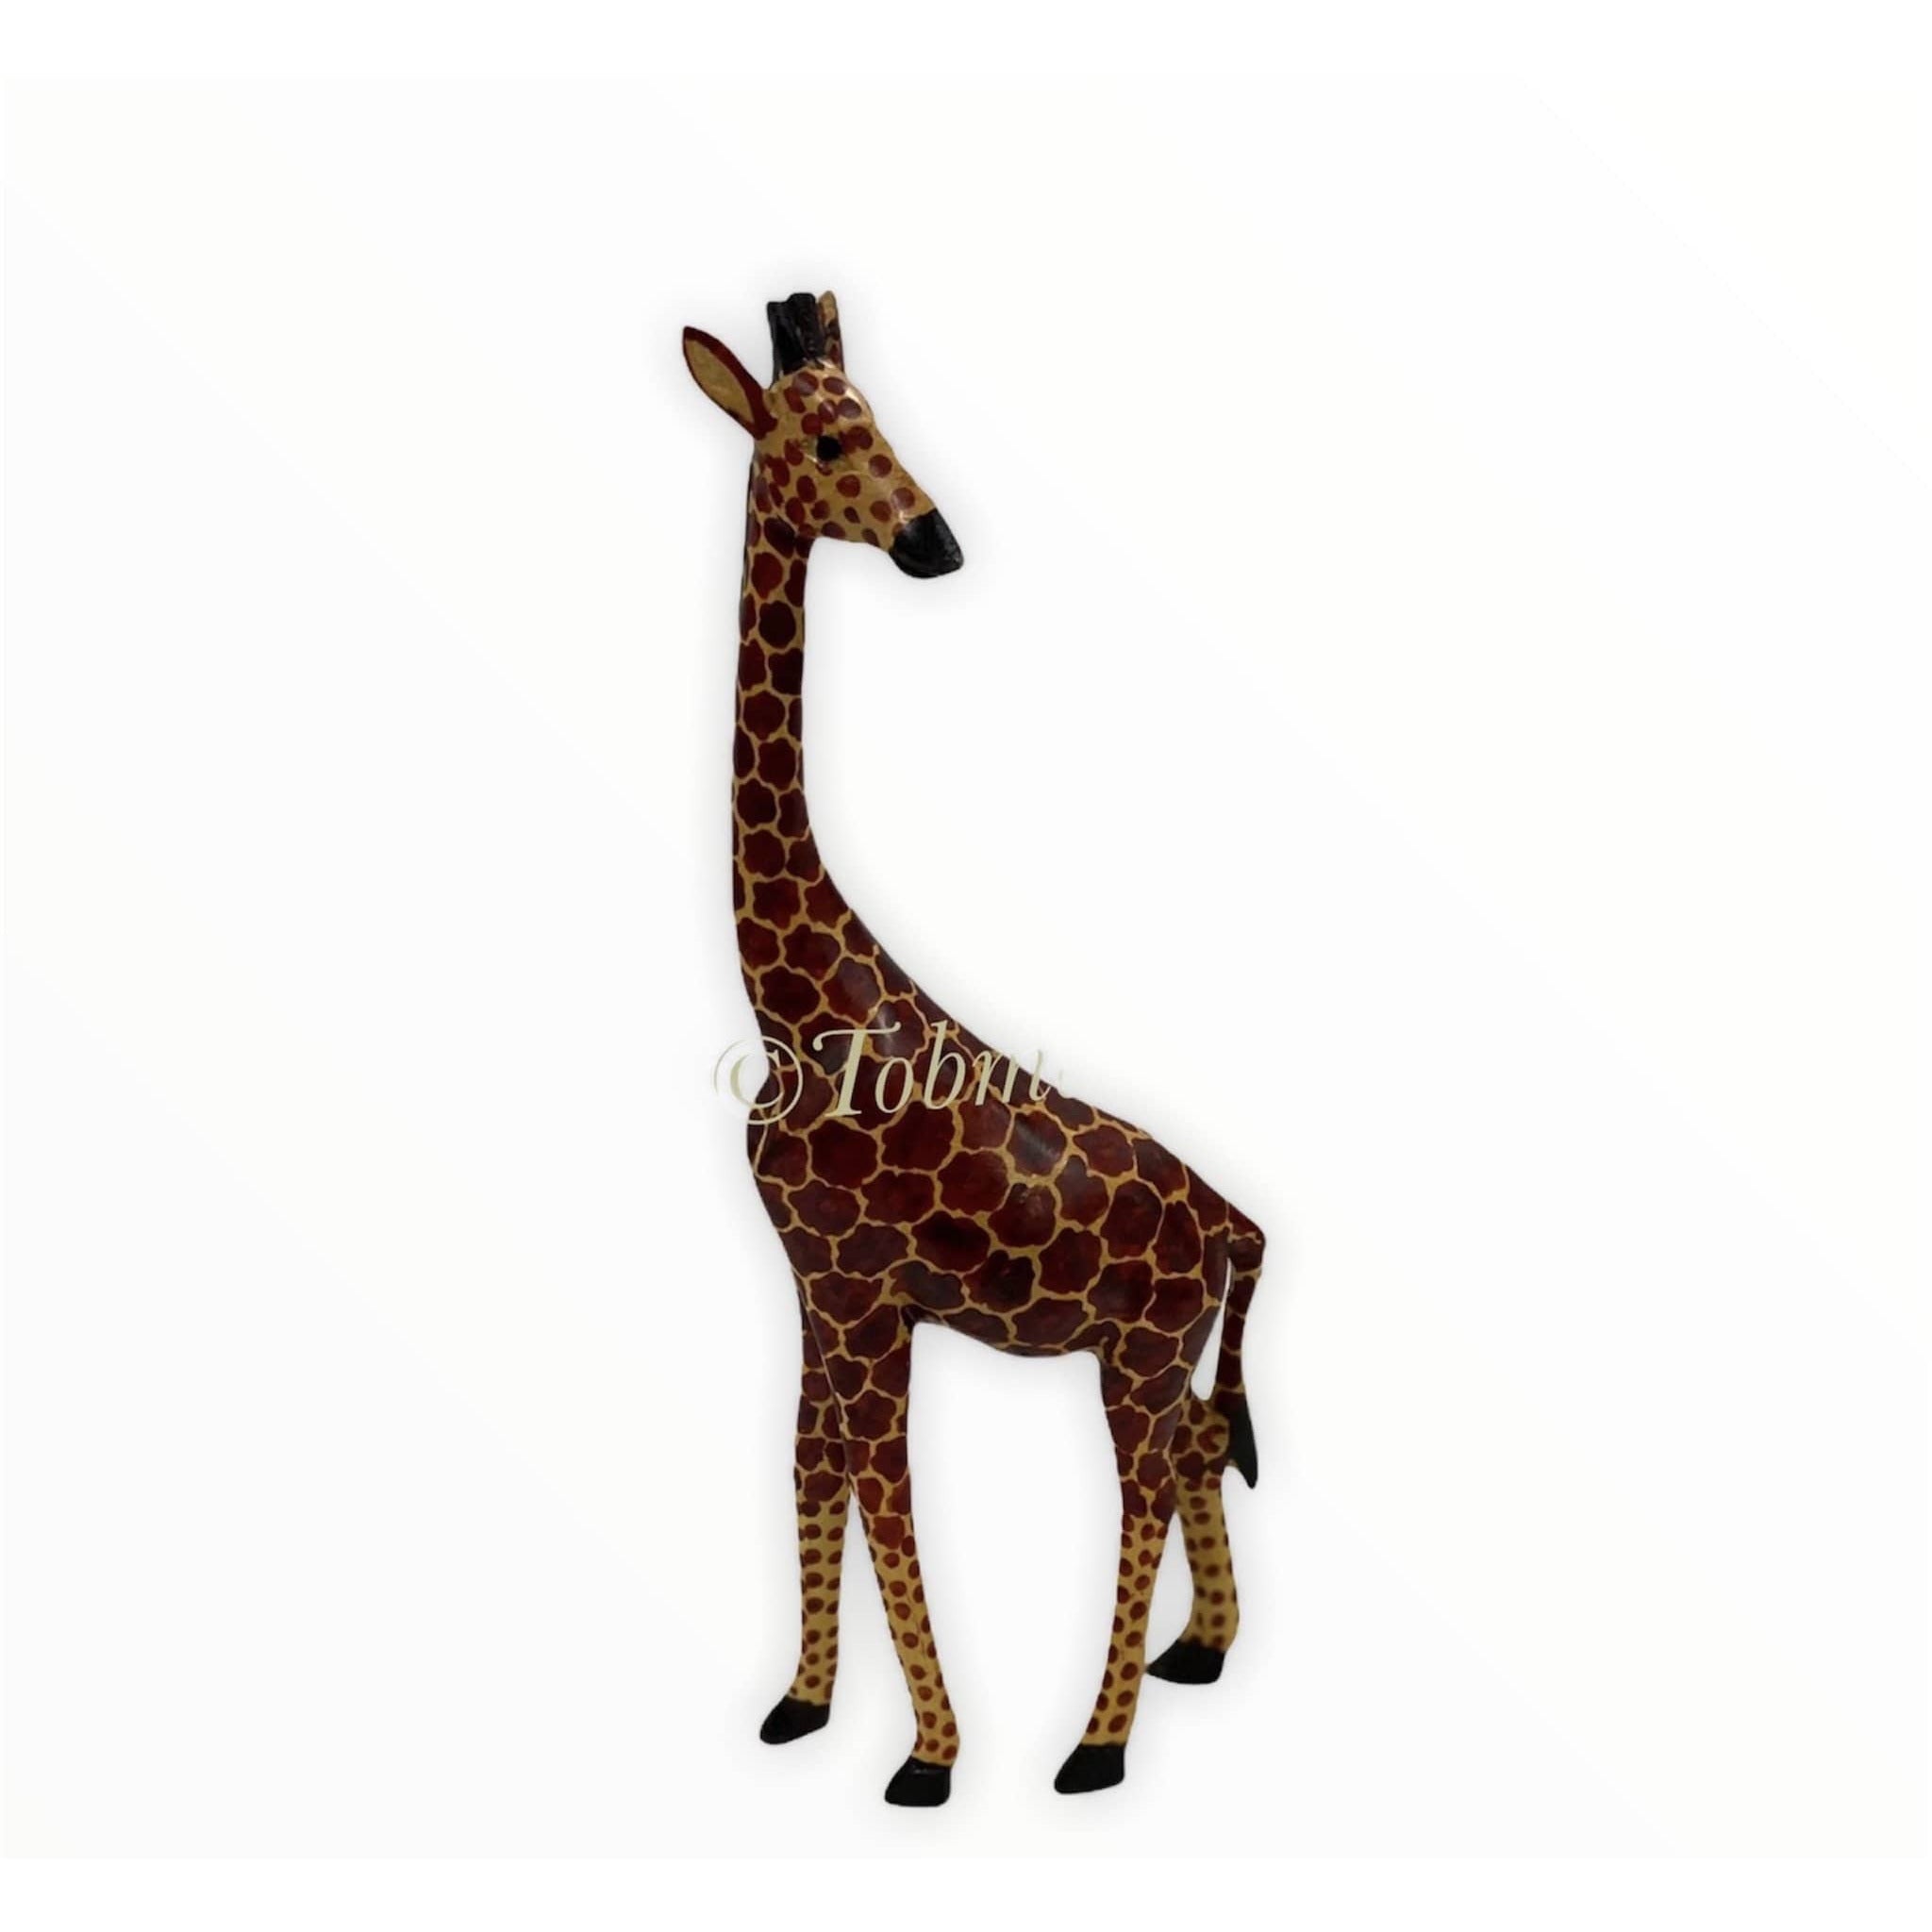 Tobmarc Home Decor & Gifts  8" Wooden Giraffe sculpture, Wooden giraffe Home decor, African Wooden Giraffe Statue